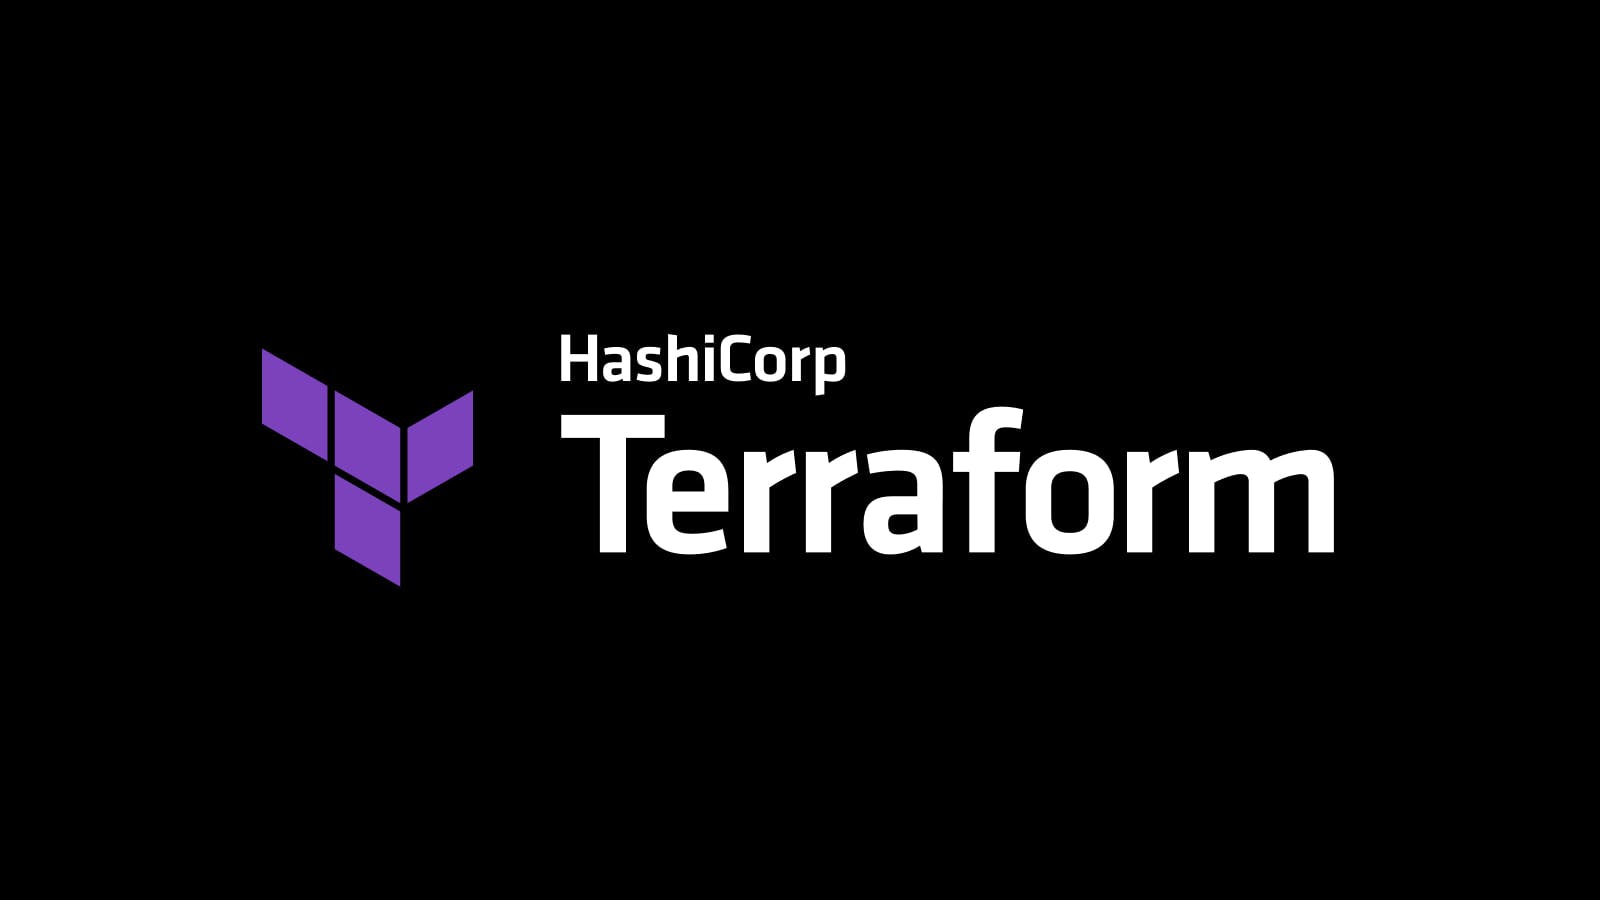 Terraform Enterprise adds projects, drift detection, and more